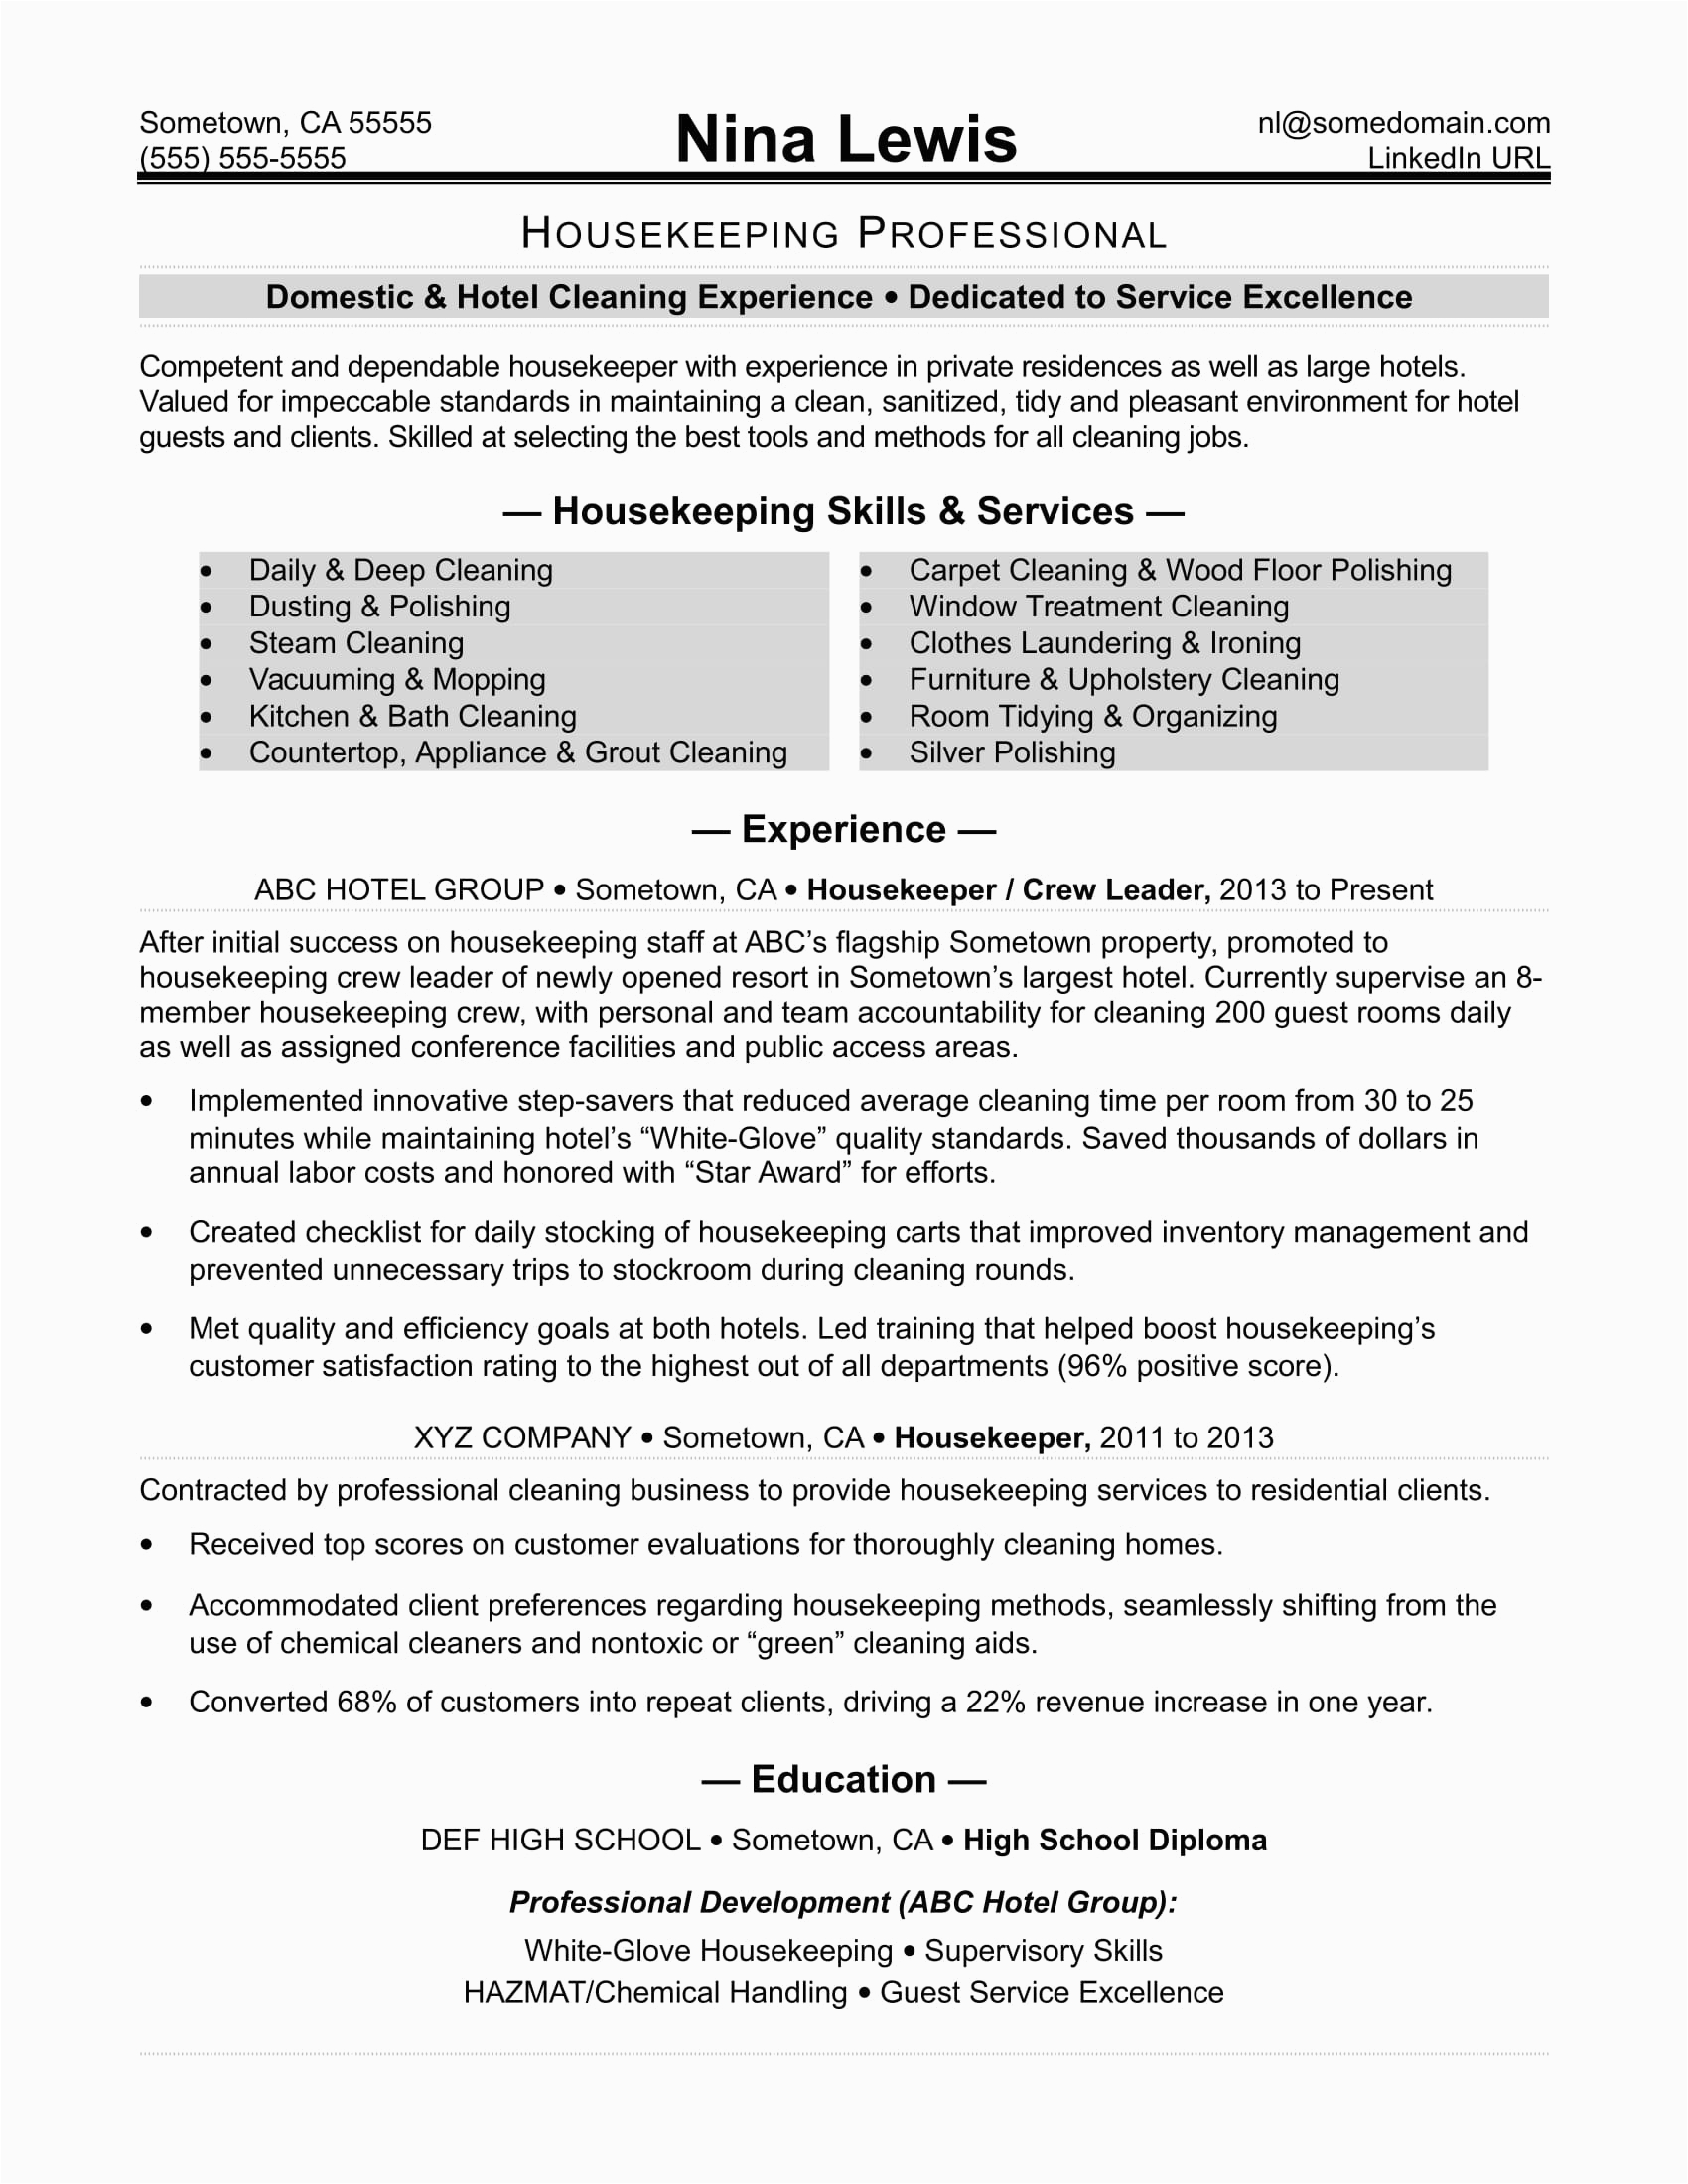 Sample Of Resume for House Keeper Housekeeping Resume